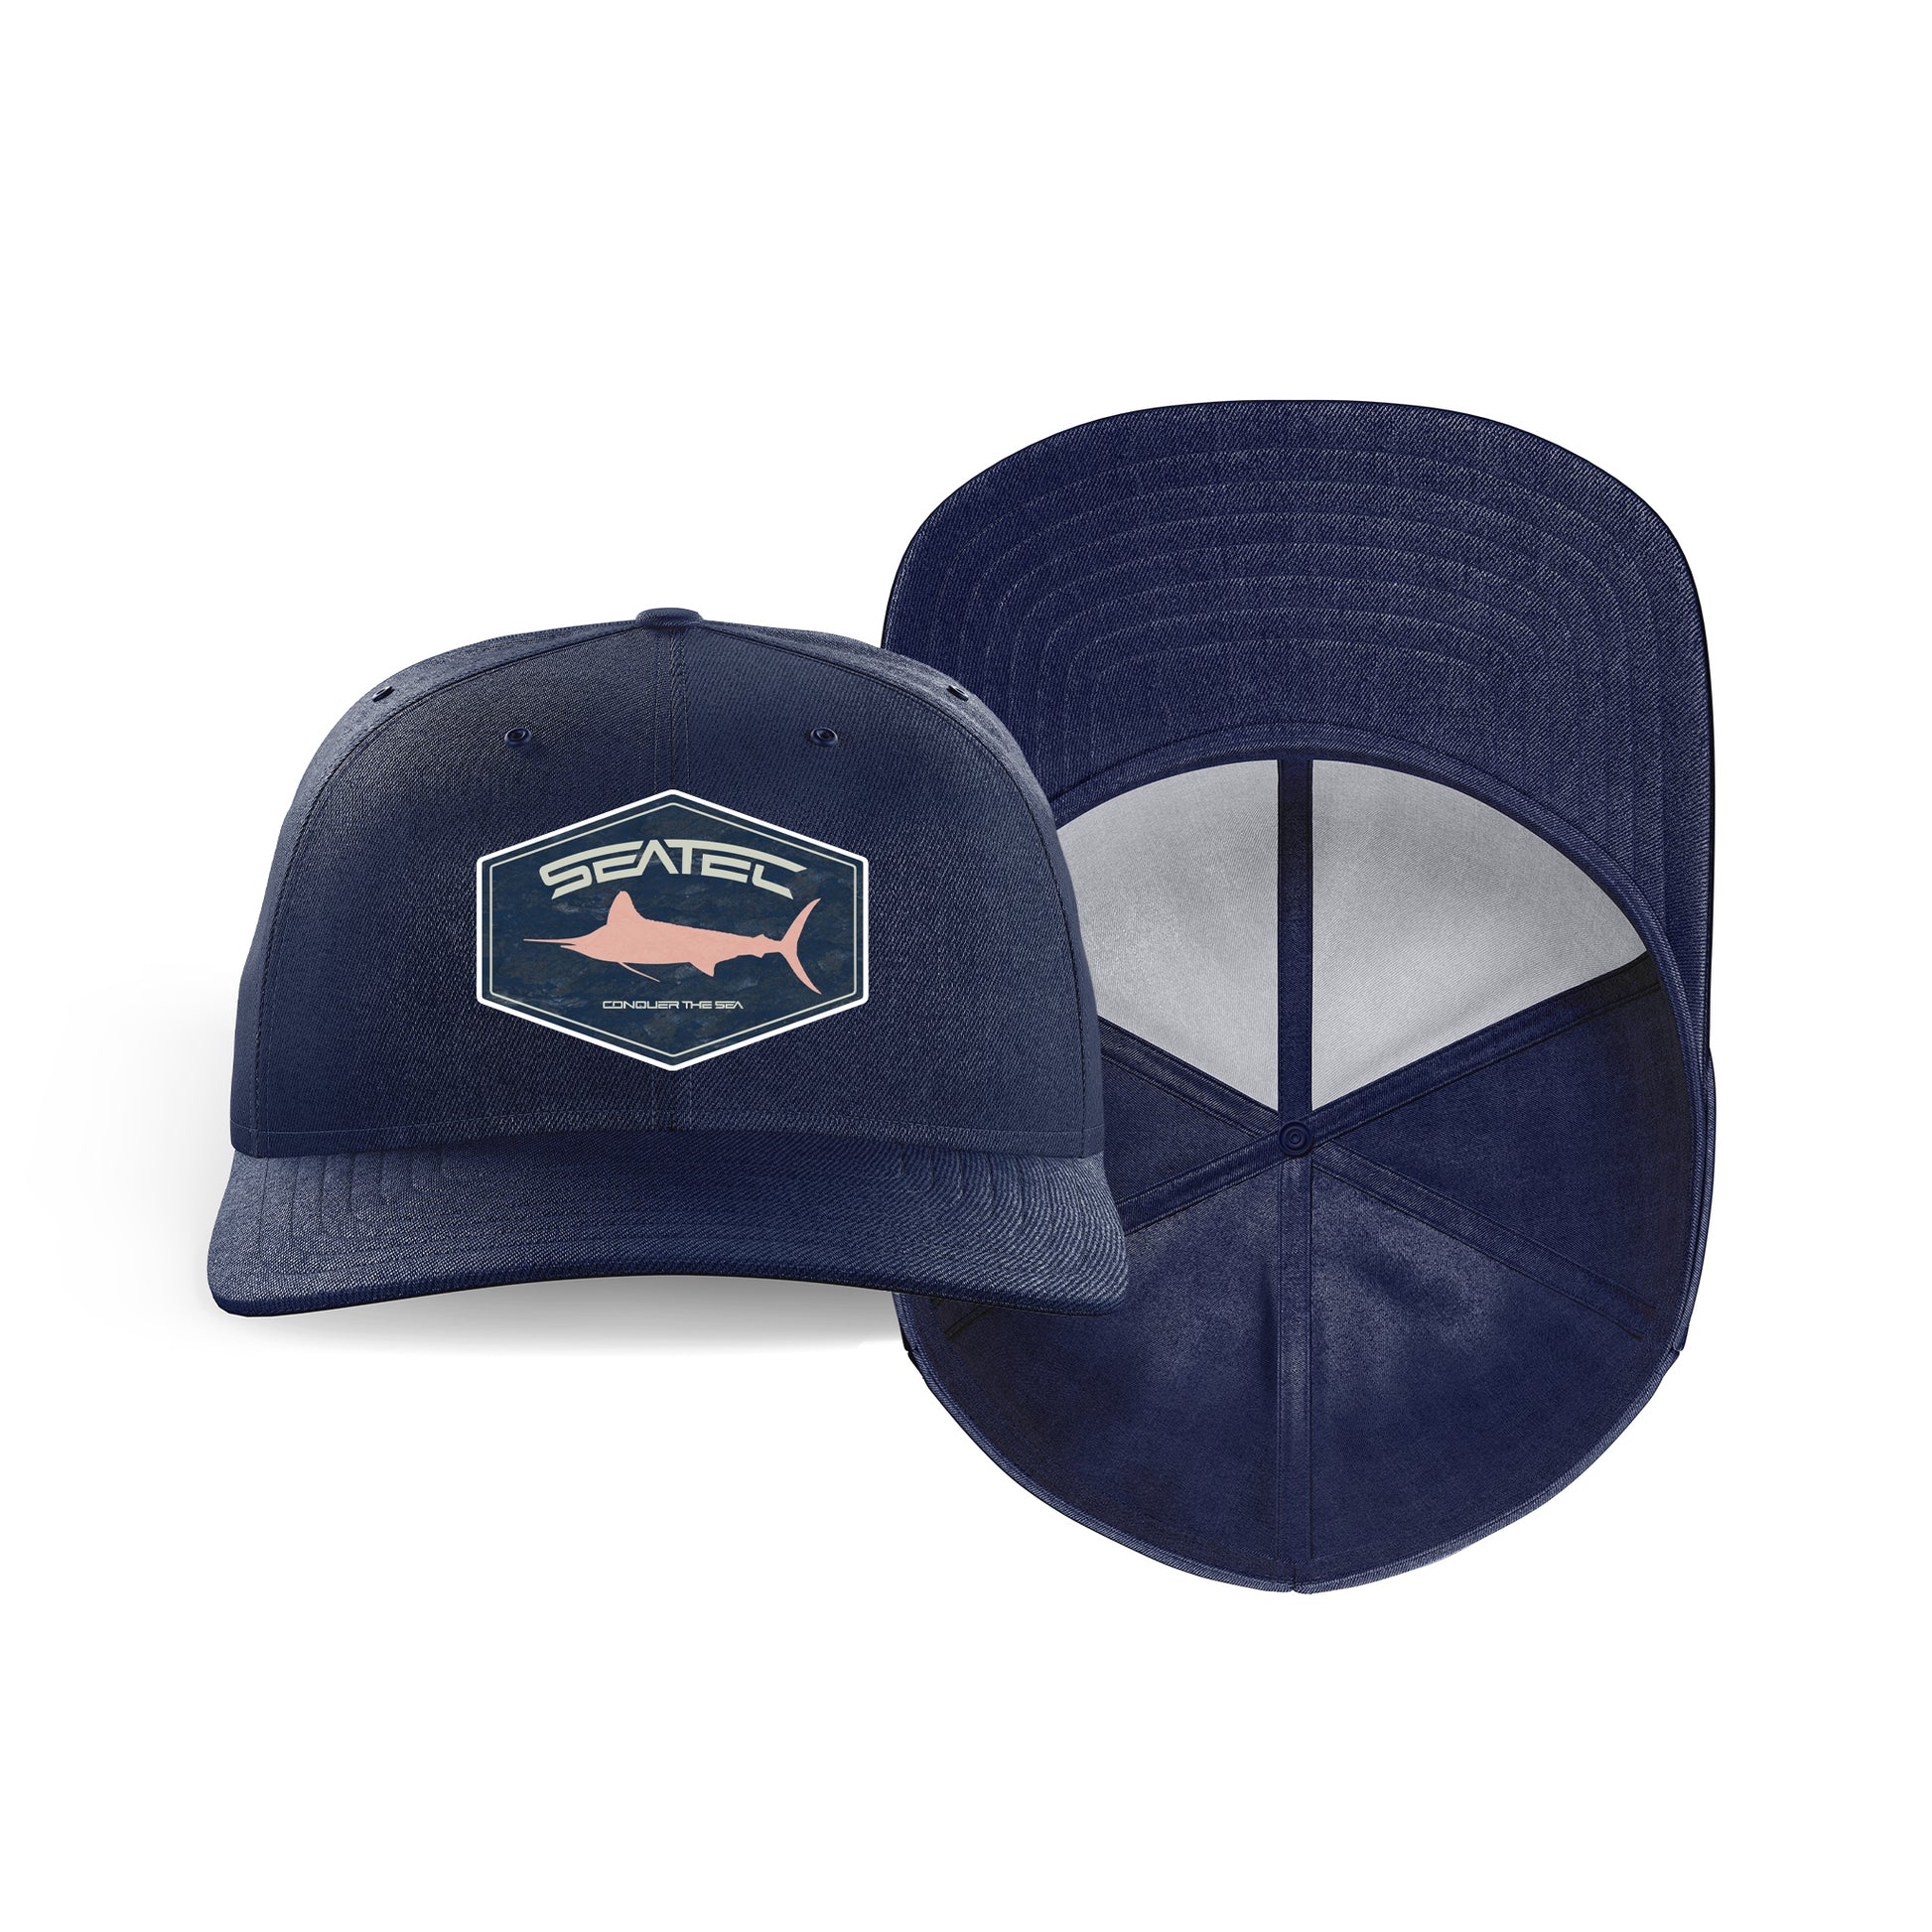 Seatec Outfitters White Marlin Mesh Snapback Cap, Tri Tec Performance Headwear